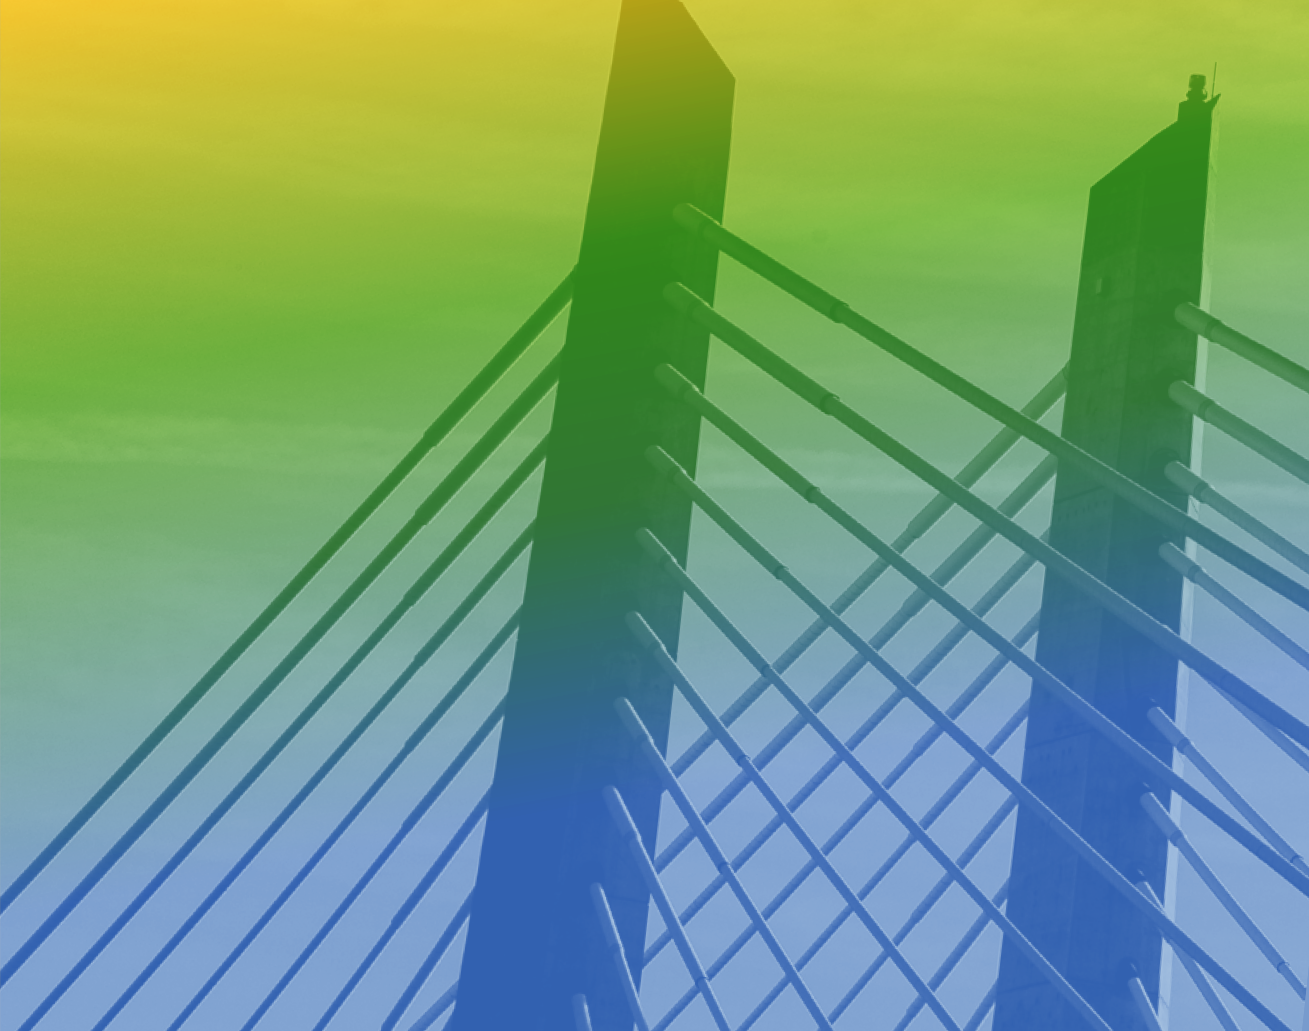 Tilikum Bridge graphic with yellow-green-blue color overlay